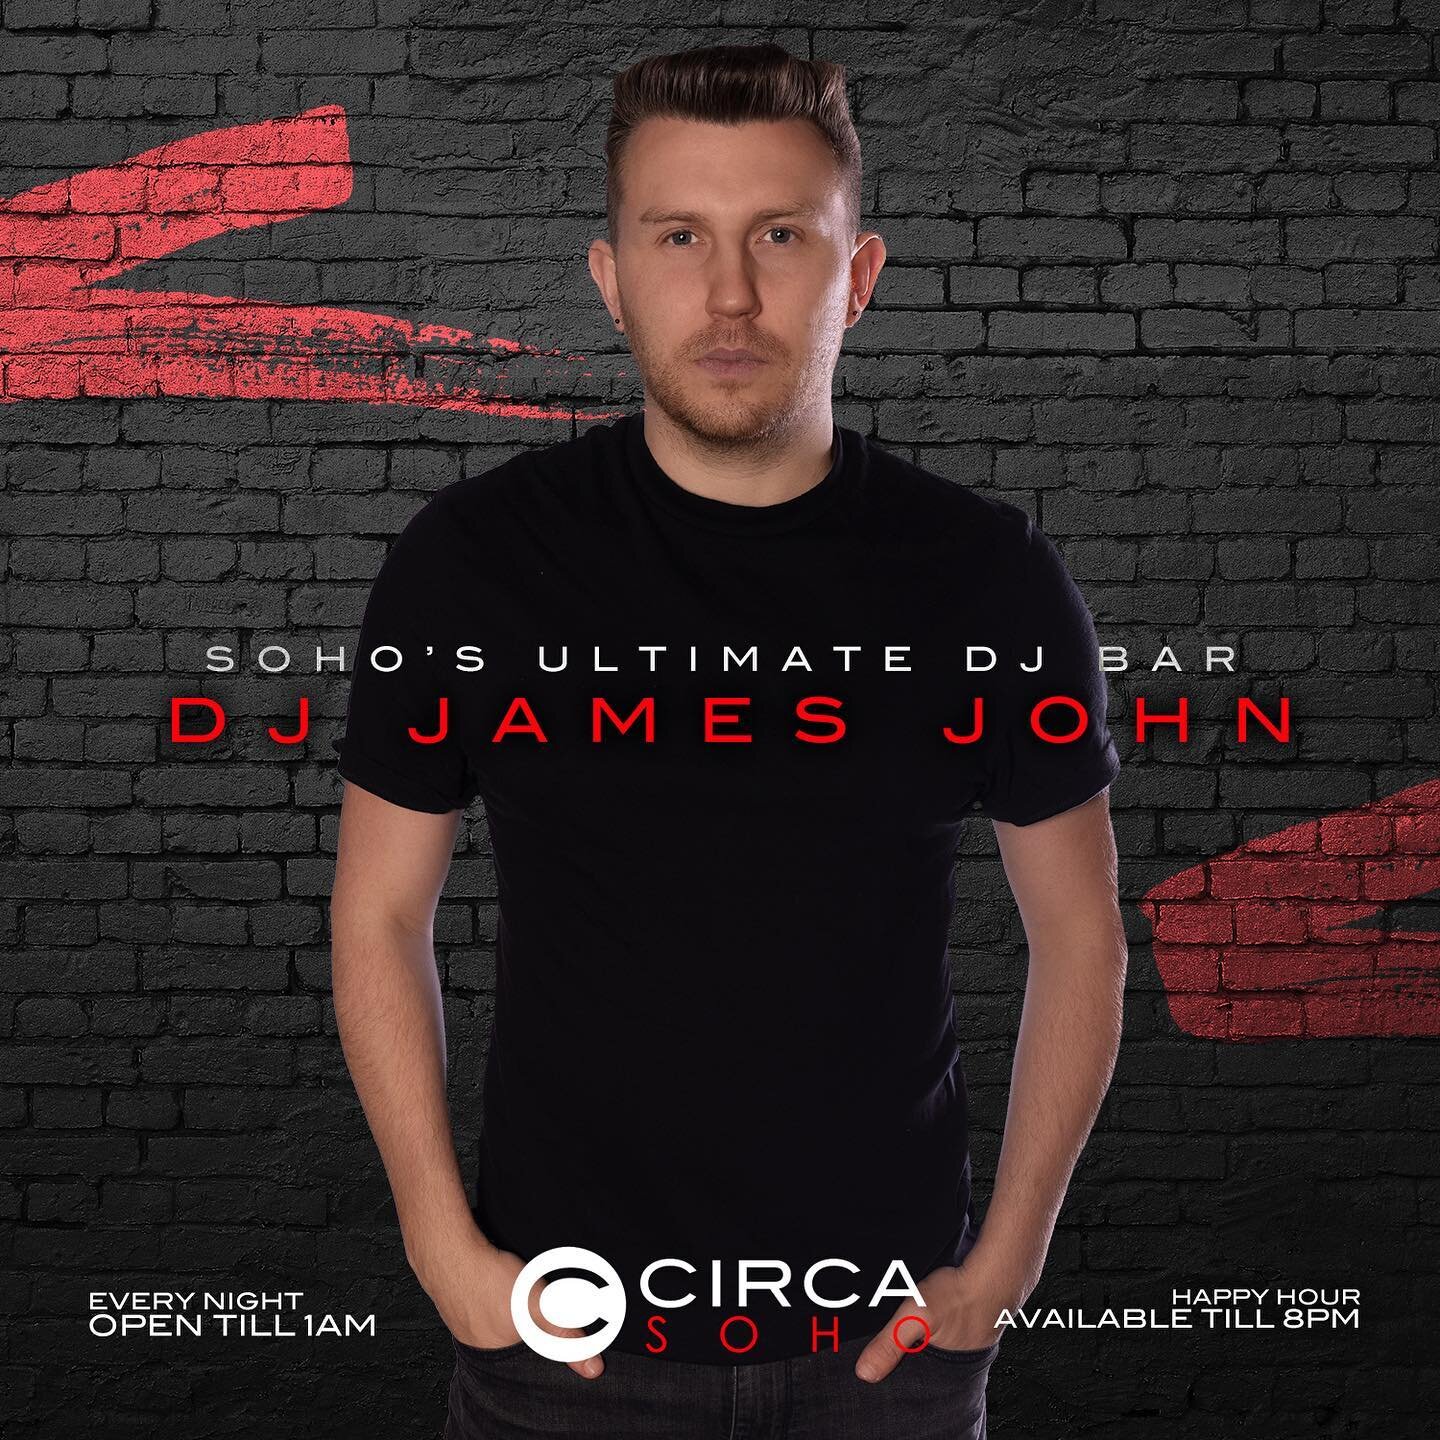 CIRCA SATURDAYS //

&bull; DJ James John
&bull; DJ Joey Tempo

OPEN TILL 1AM //